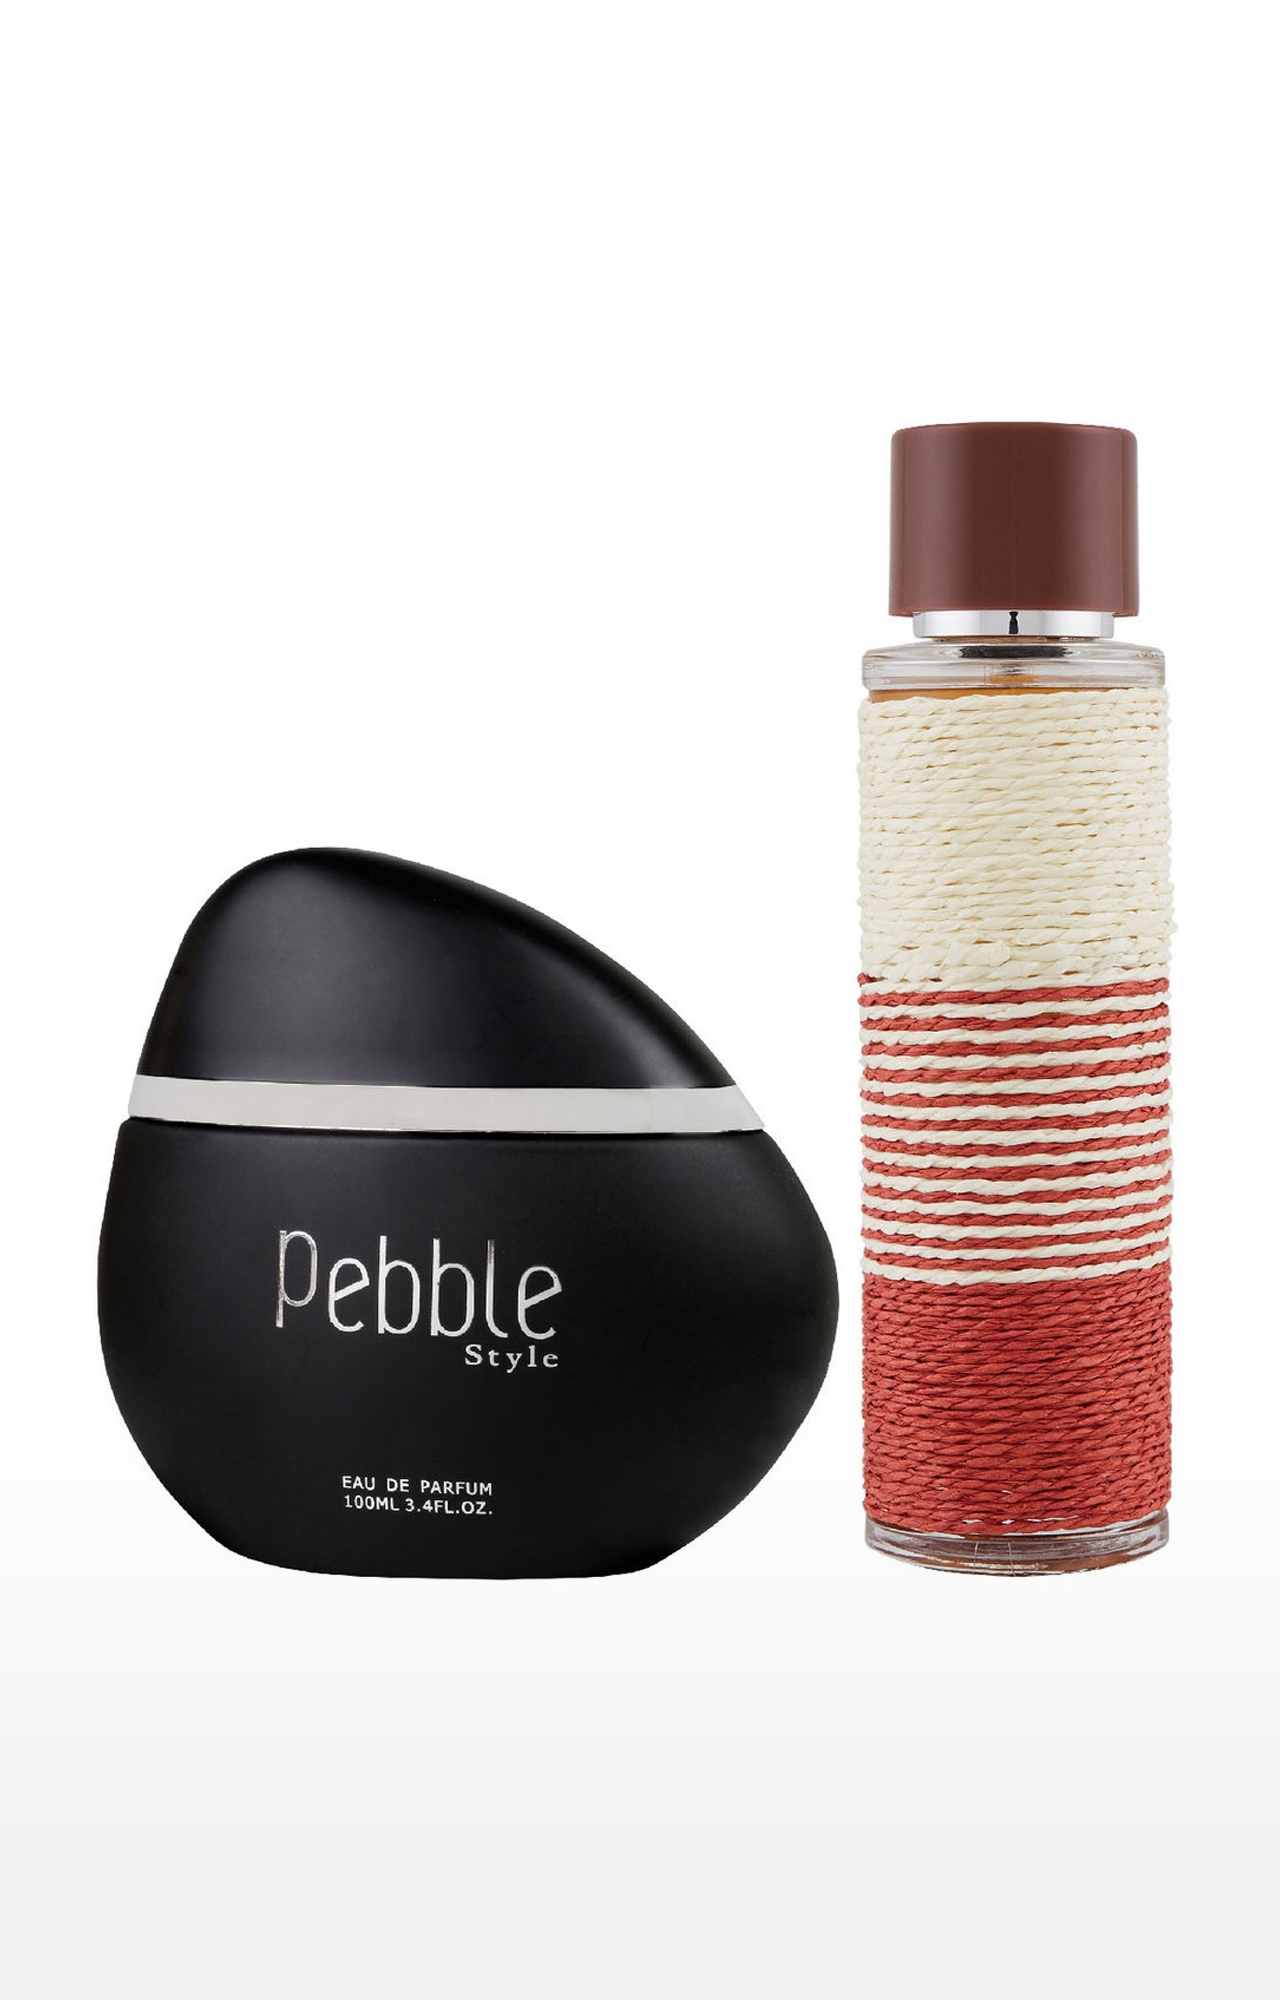 Maryaj | Maryaj Pebble Style Eau De Parfum Perfume 100ml for Men and Maryaj Deuce Homme Eau De Parfum Perfume 100ml for Men 0